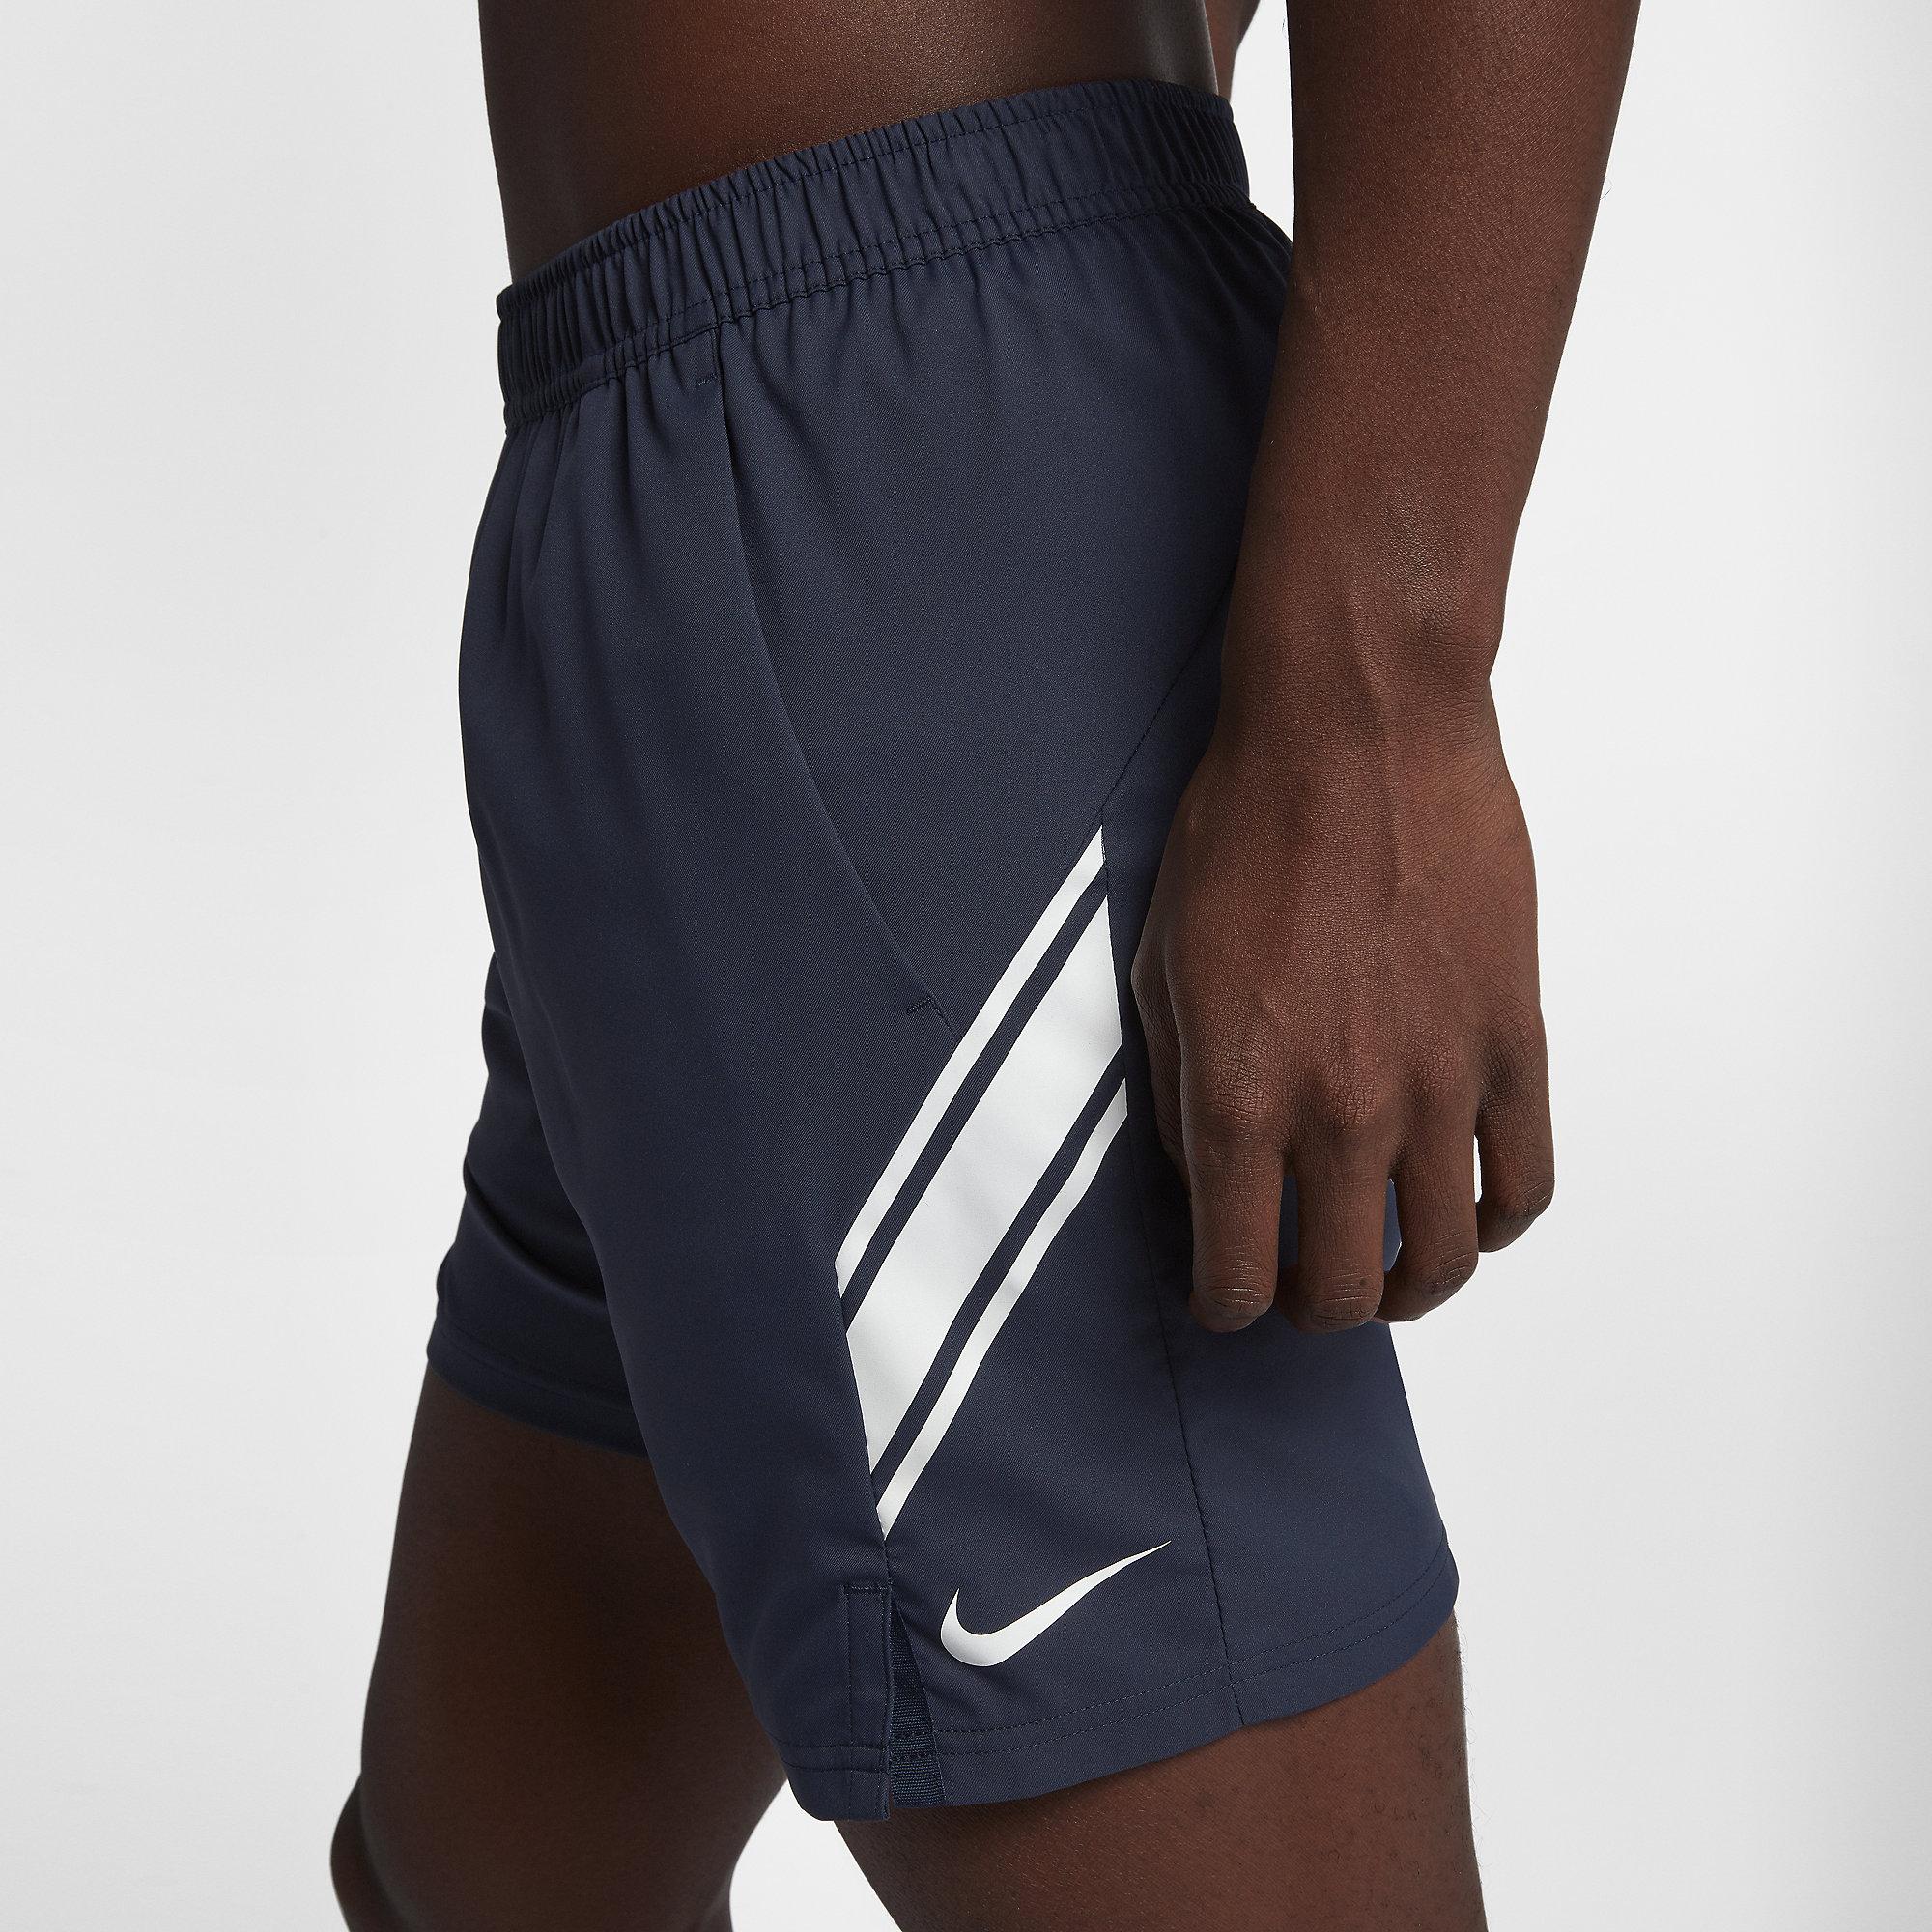 Nike dri fit shorts mens